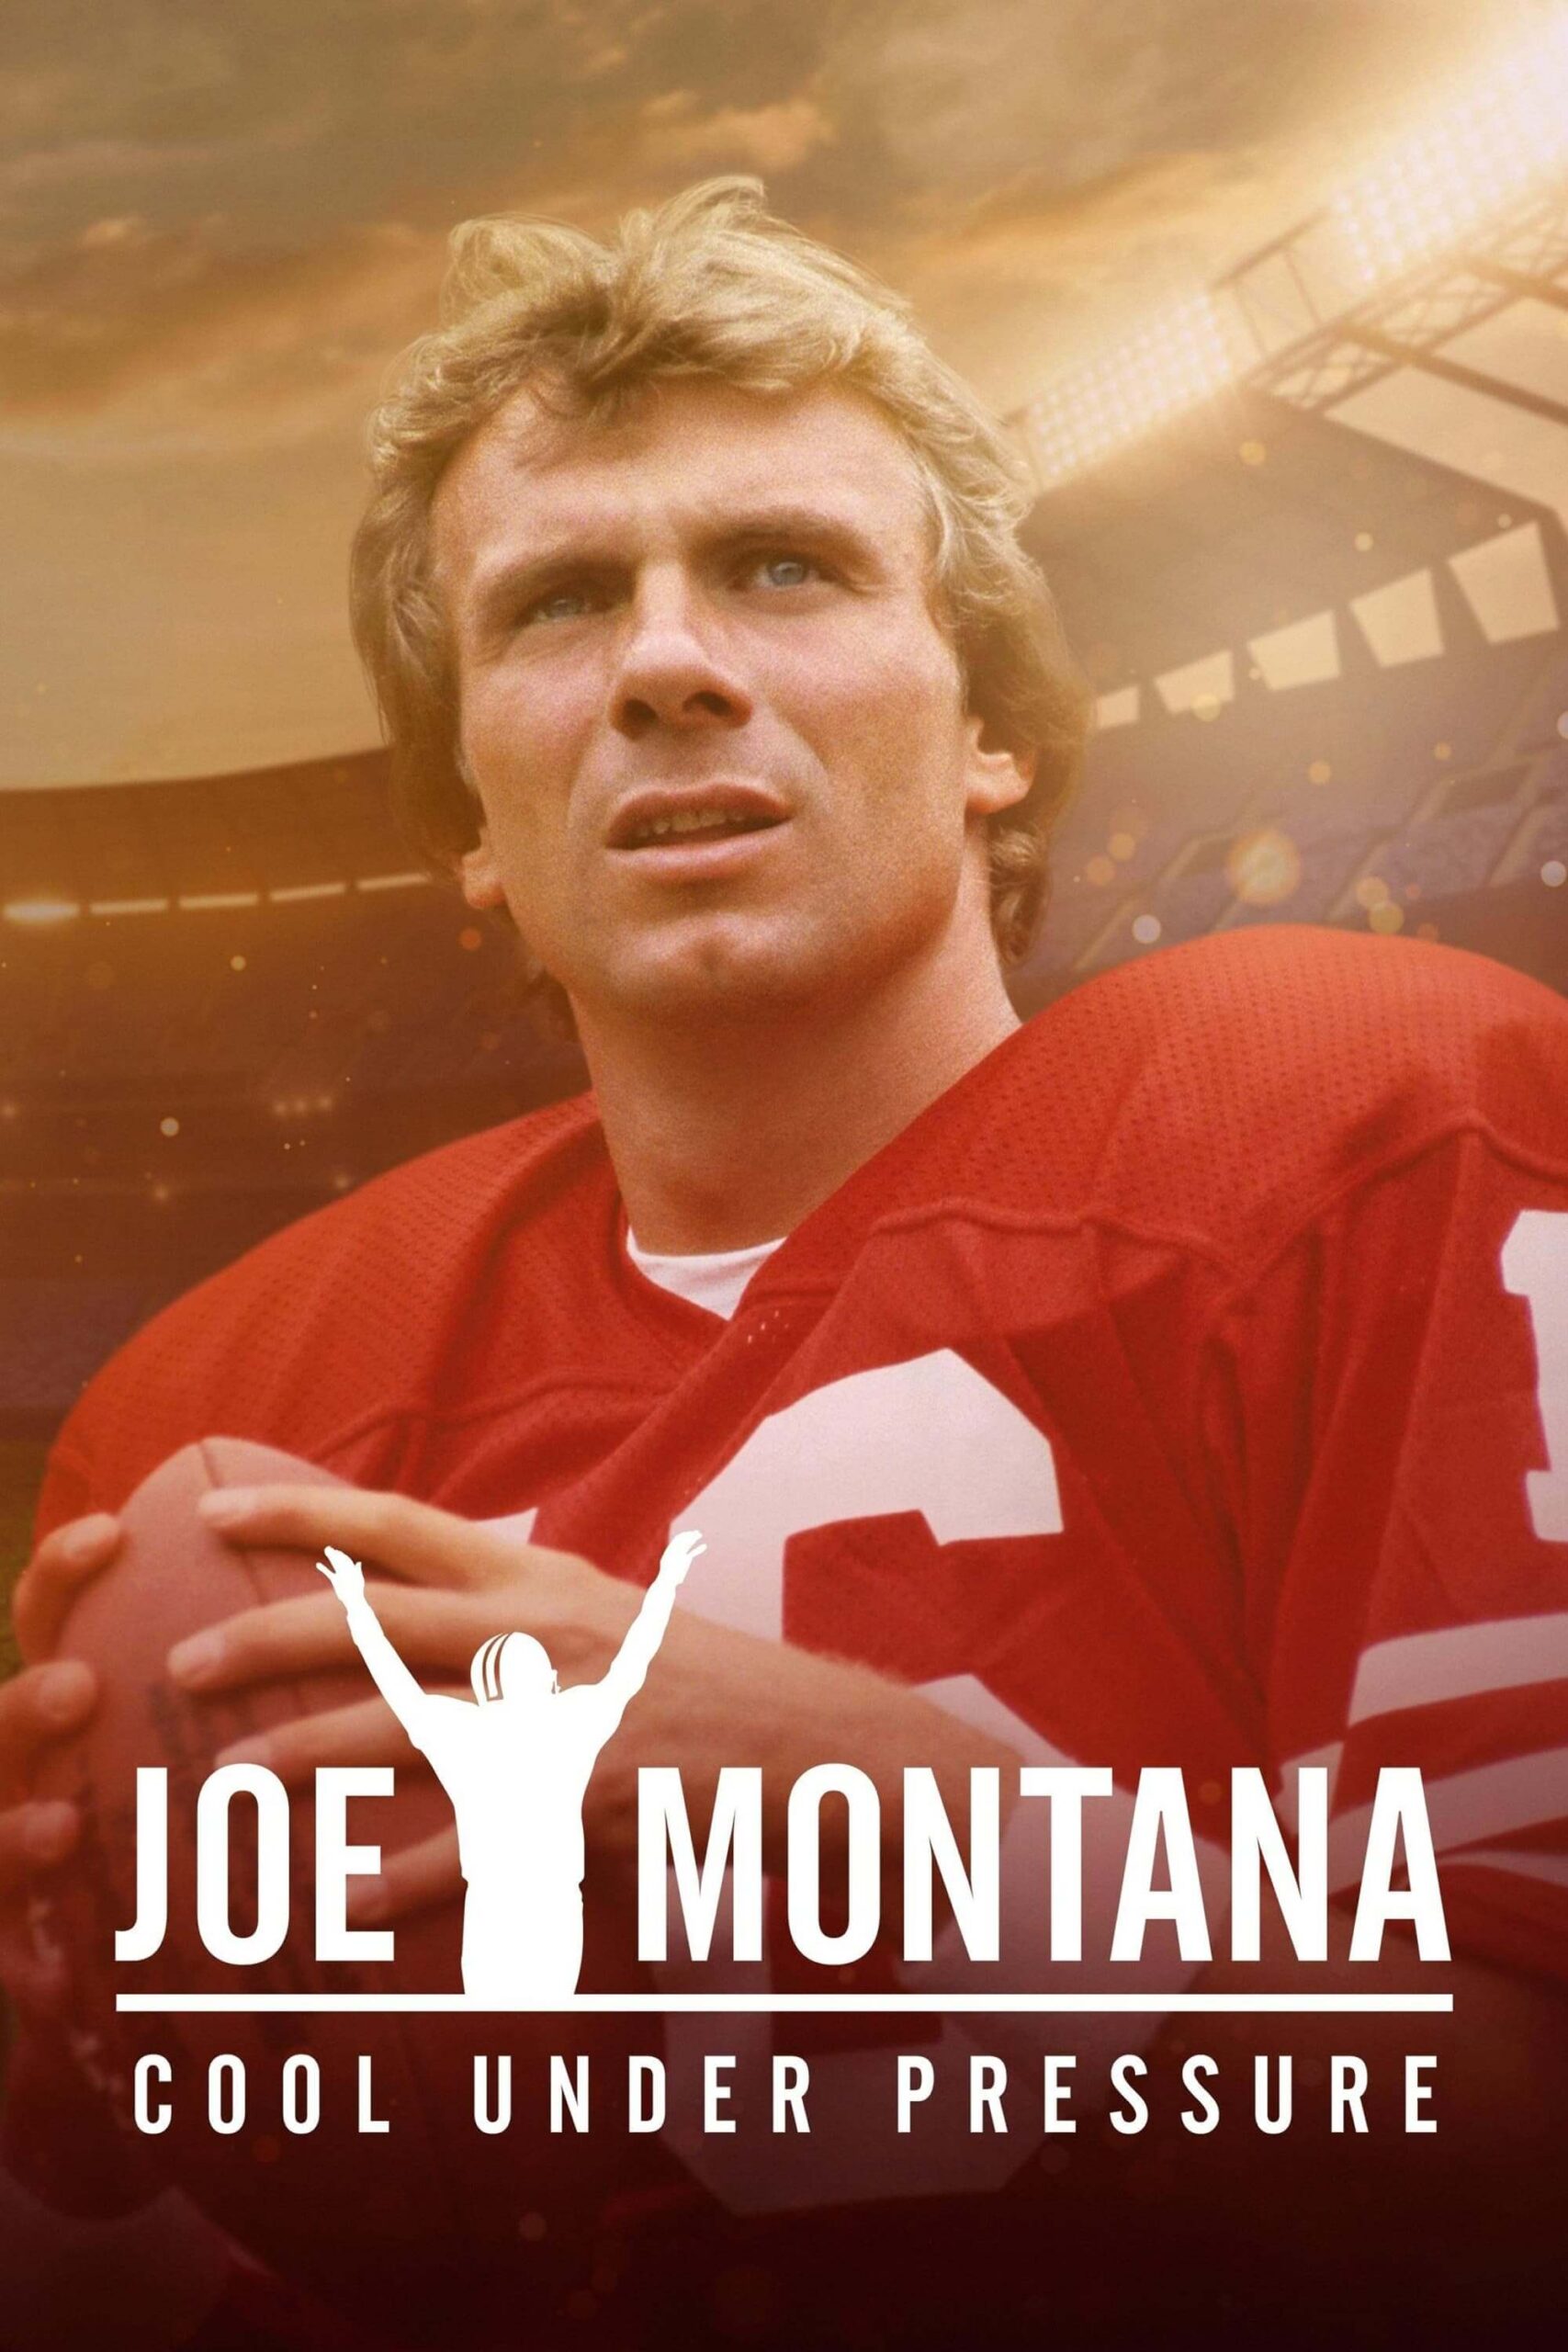 جو مونتانا آرامش در بحران (Joe Montana Cool Under Pressure)